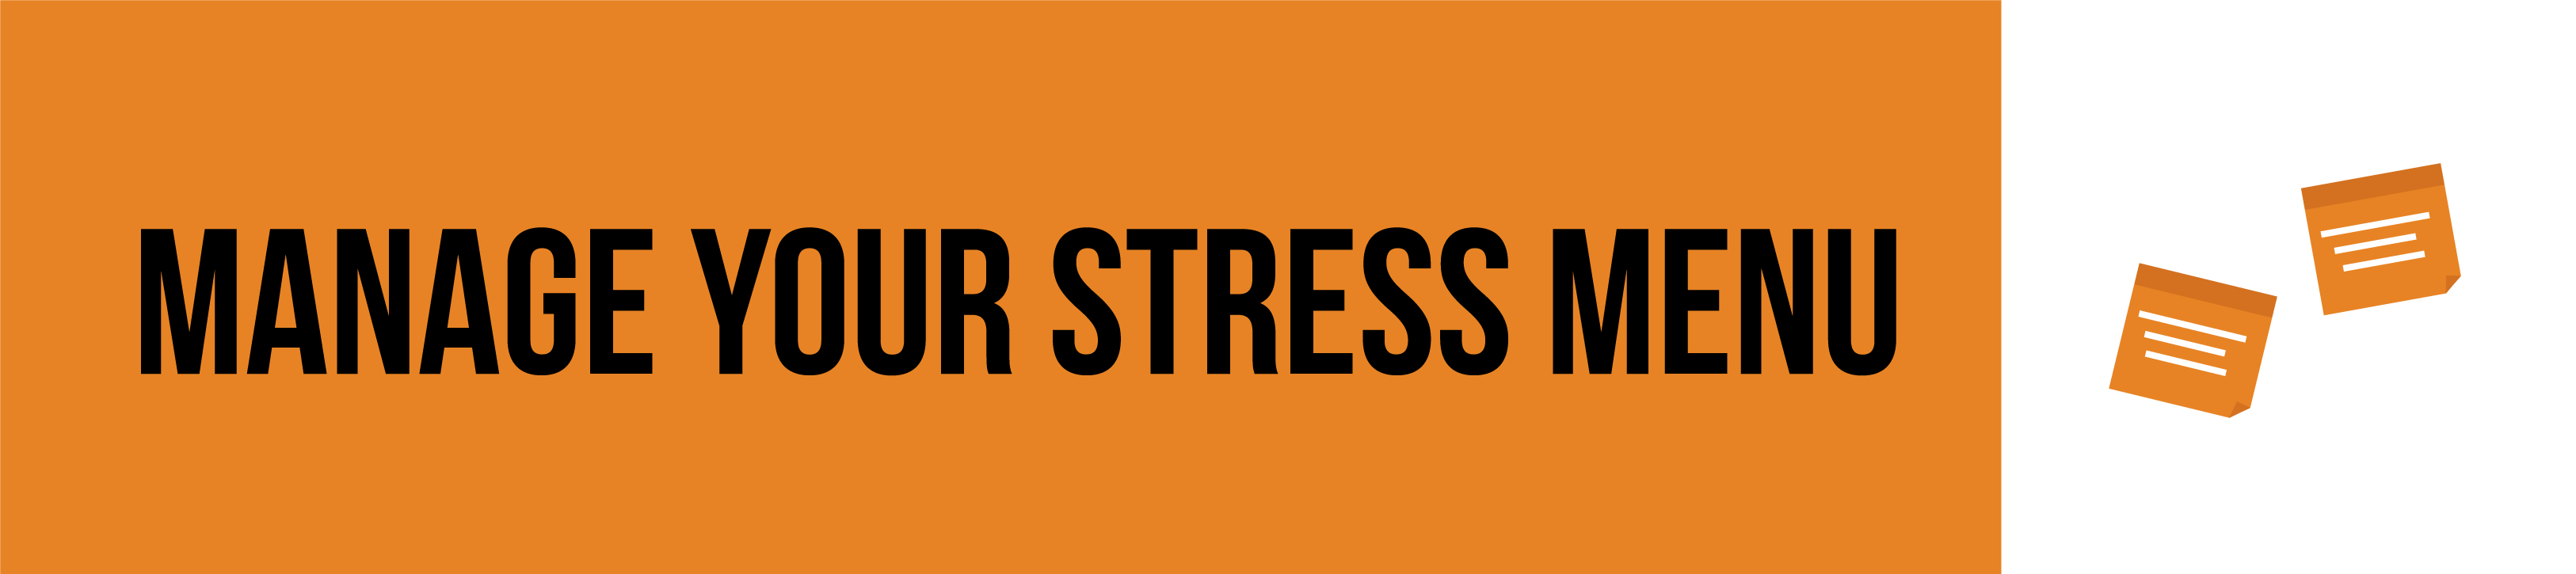 Manage Your Stress Menu